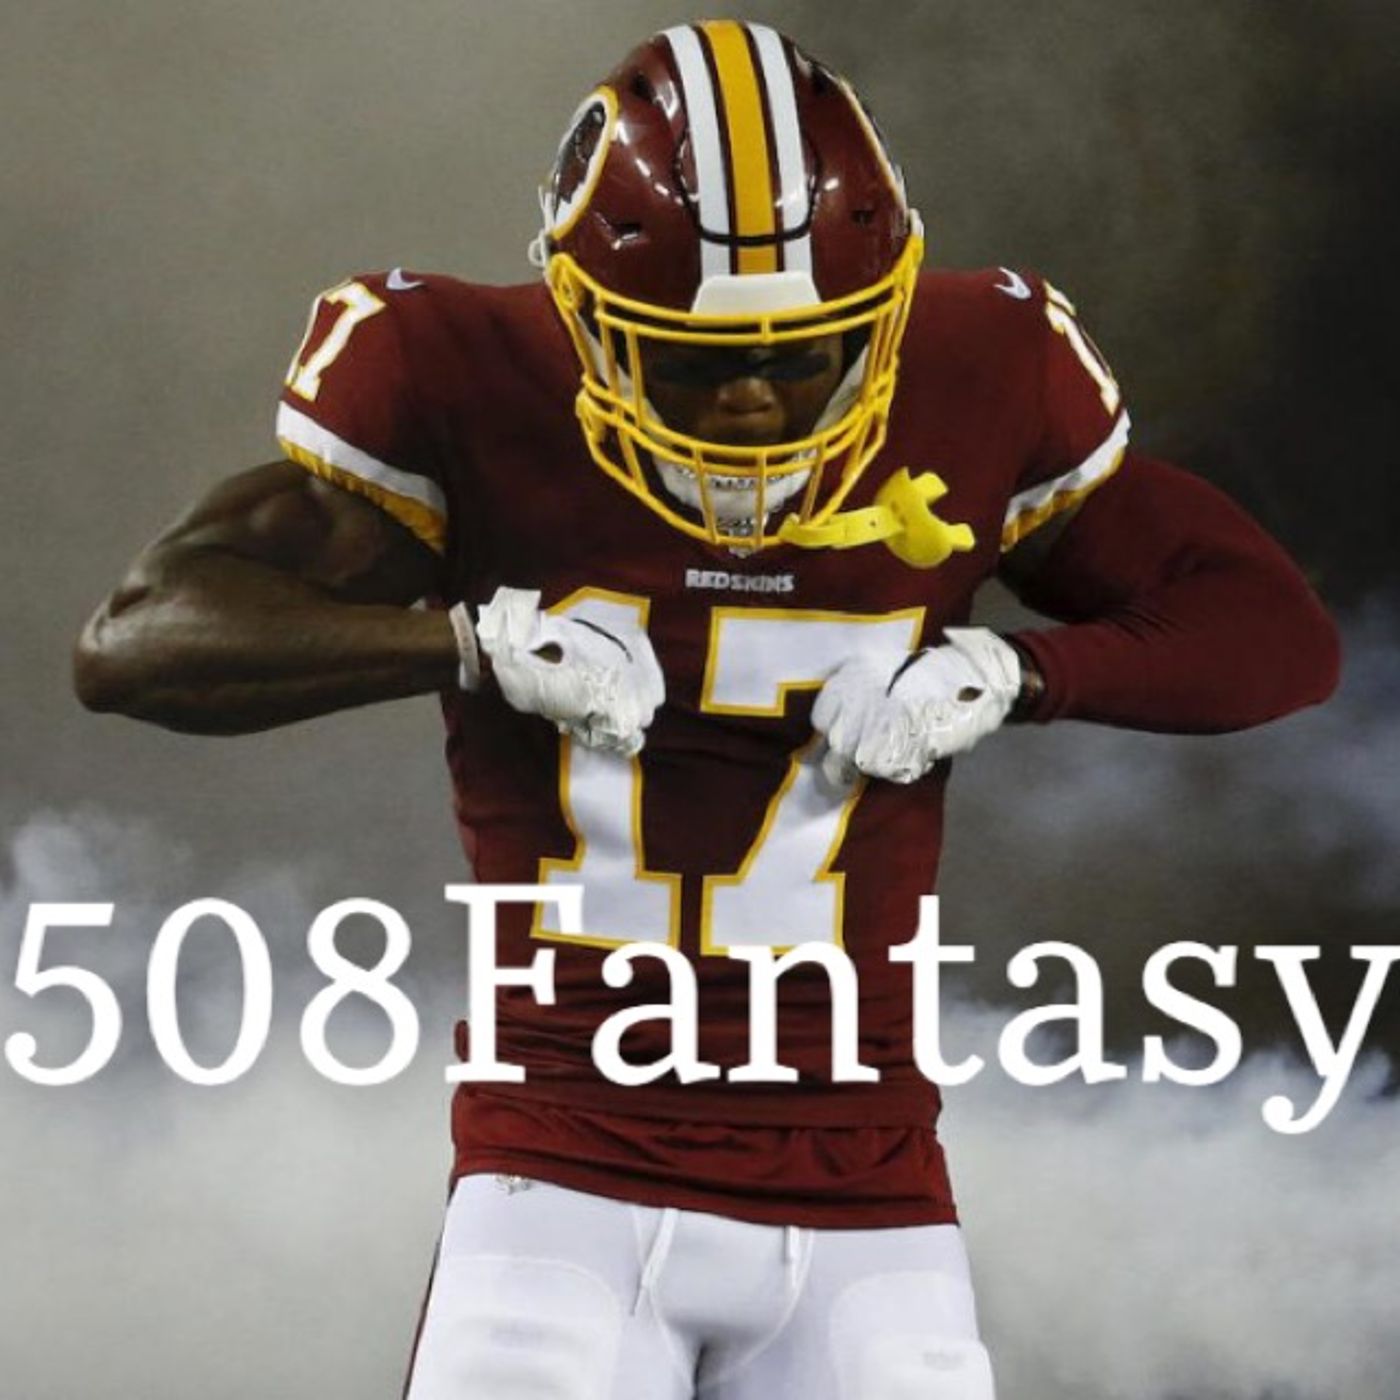 508 Fantasy Football